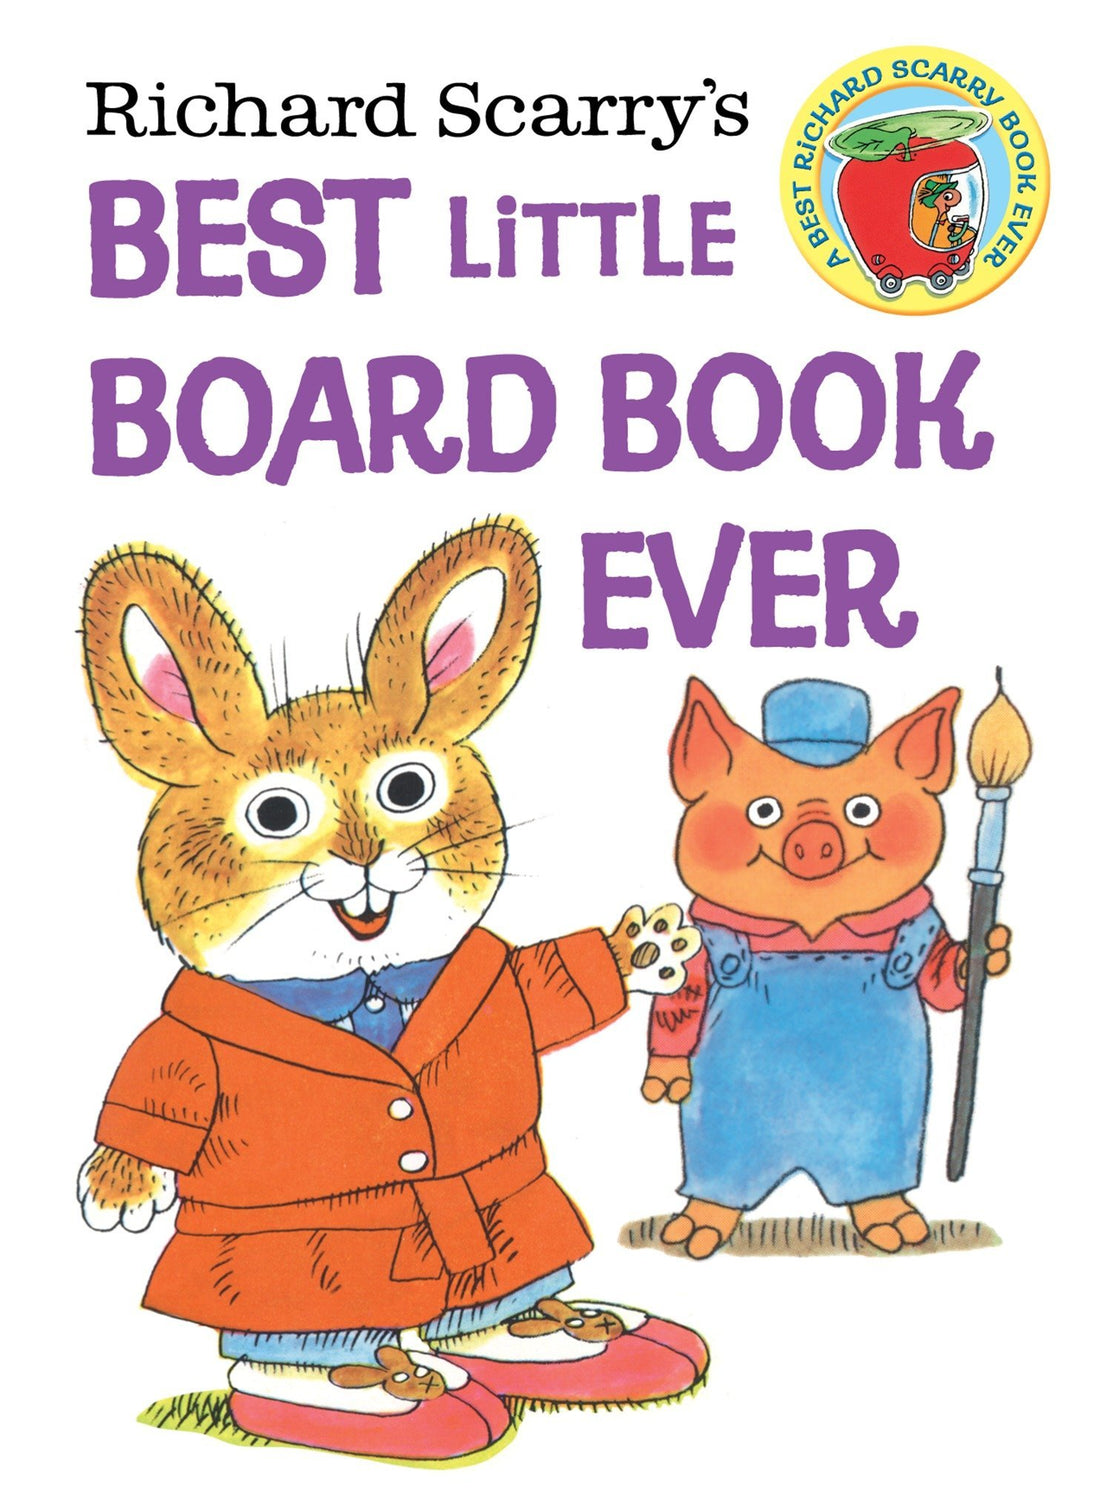 Richard Scarry's Best Little Board Book Ever - Parkette.